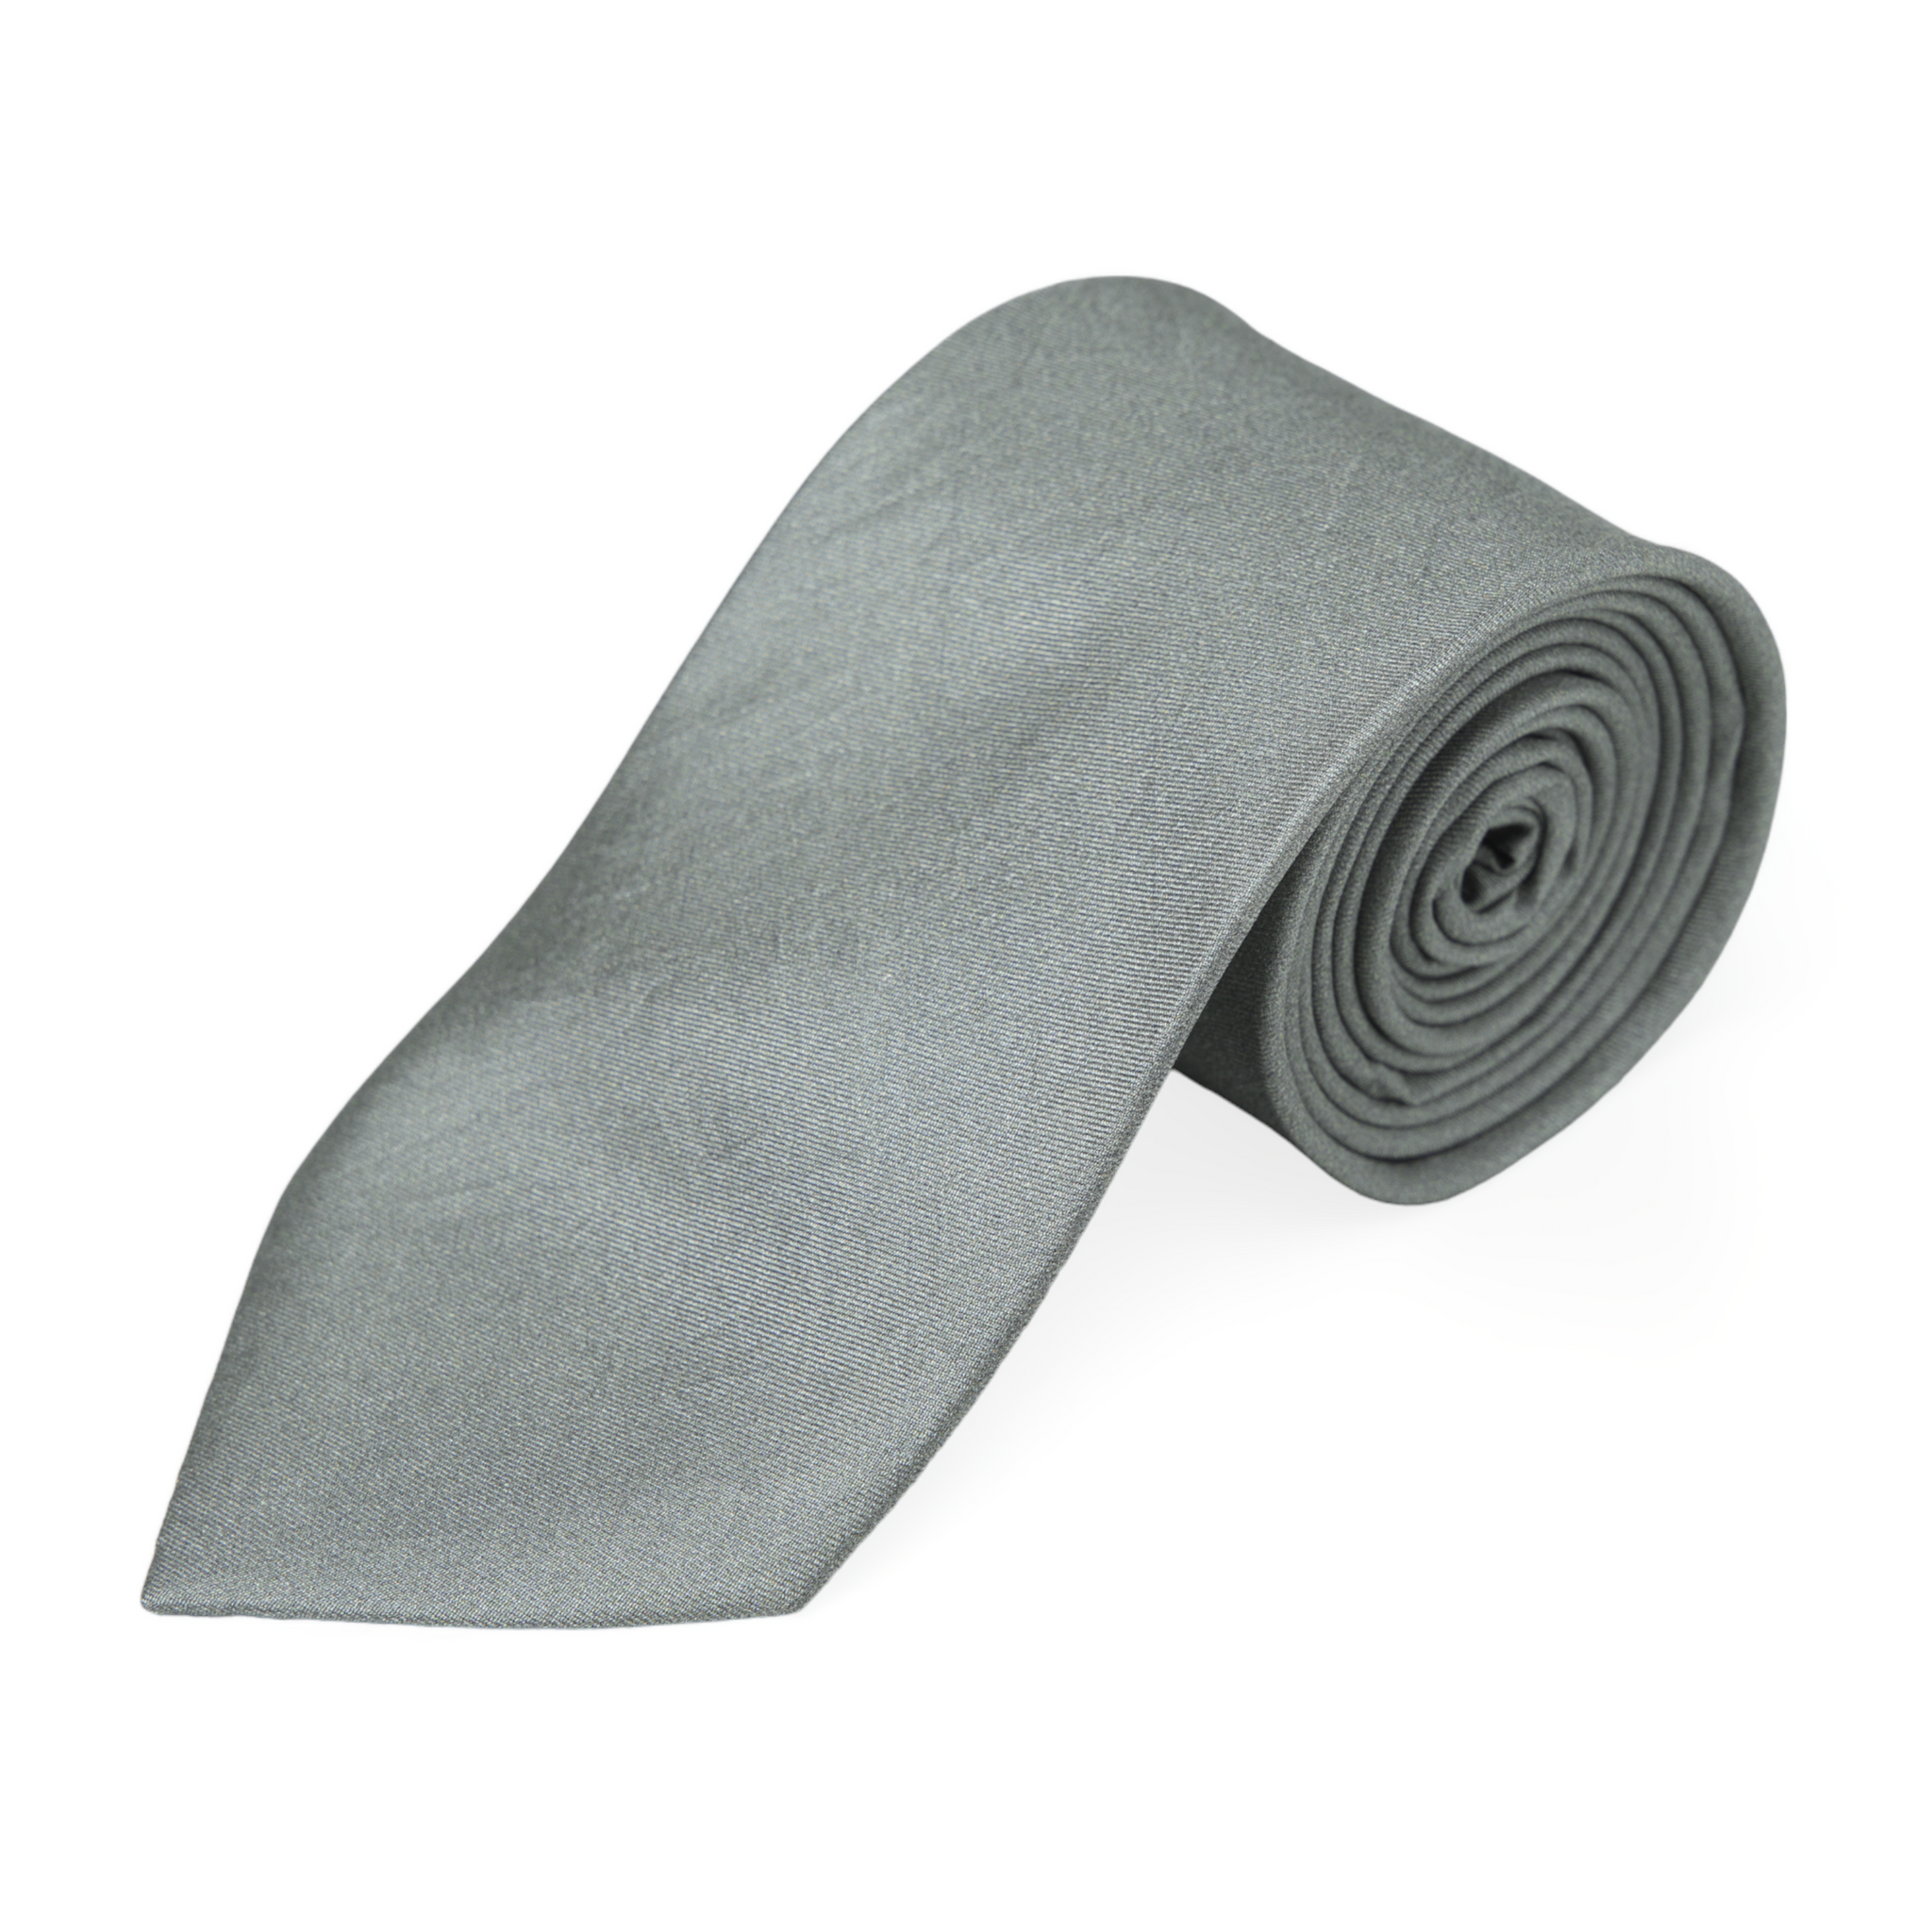 Chokore Checkered Past (Grey) - Pocket Square & Dark Grey Twill Silk Tie - Solids line